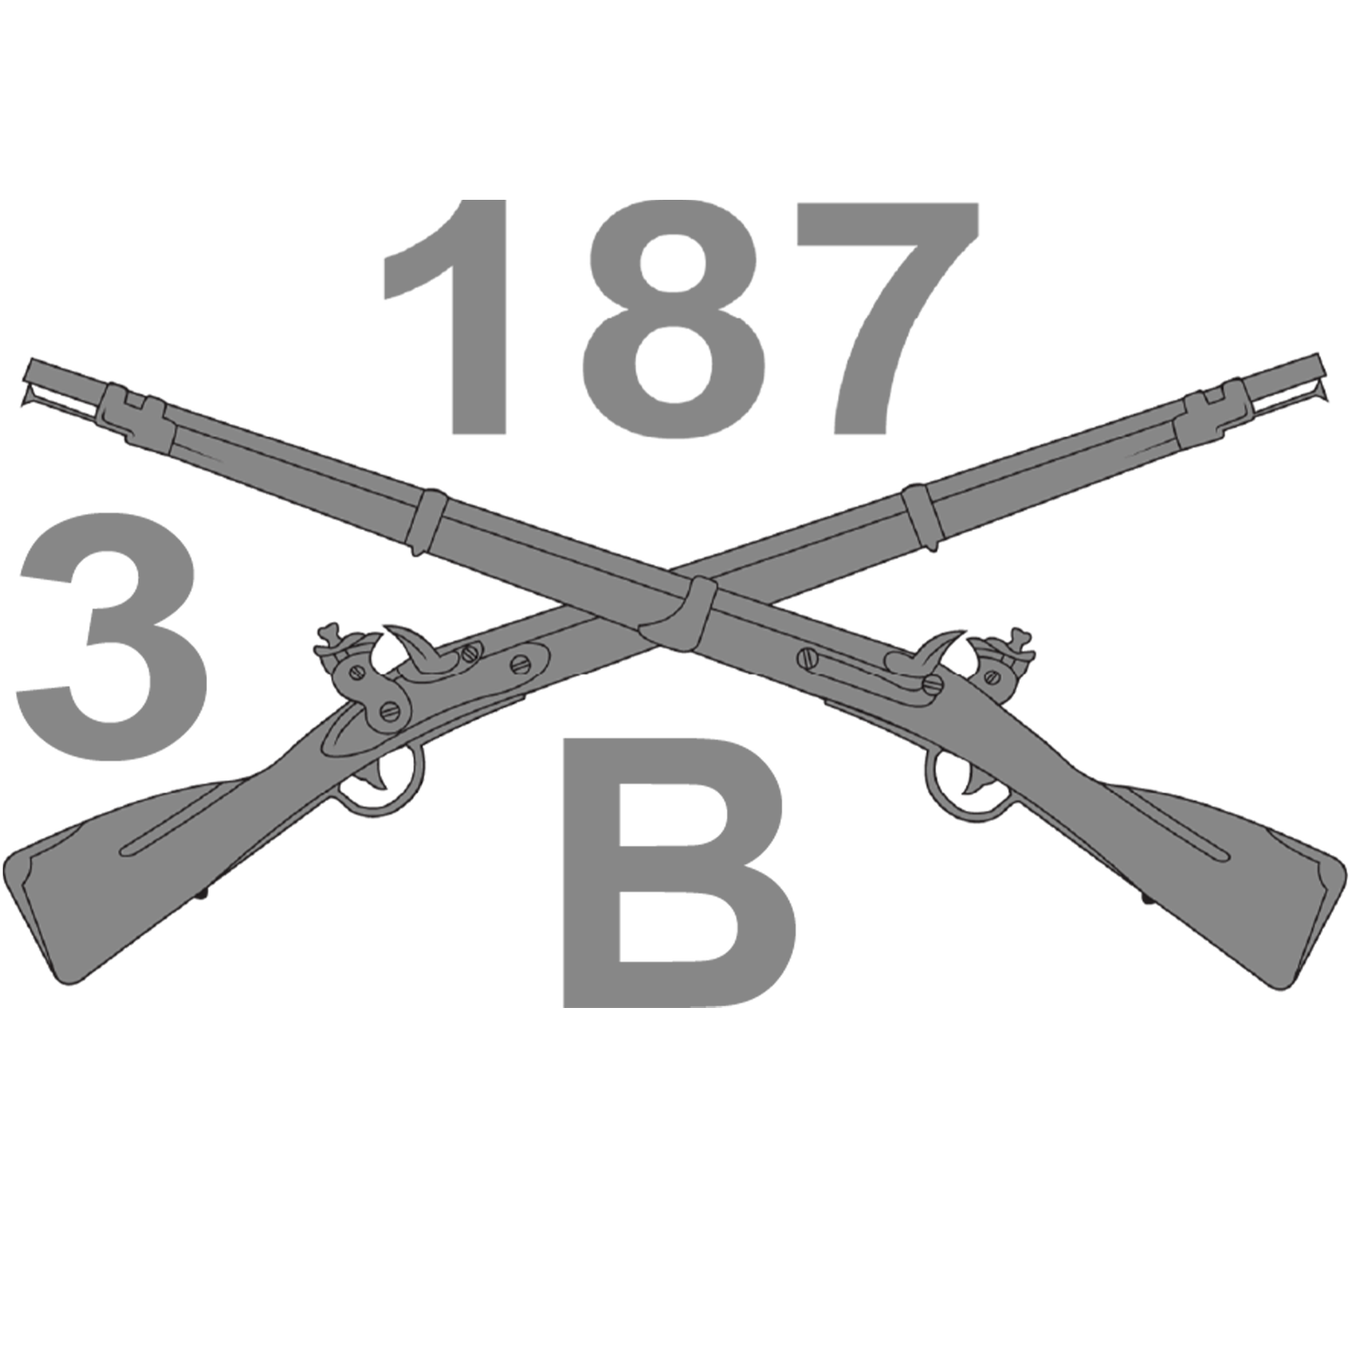 B Co 3-187 Infantry Regiment Merchandise